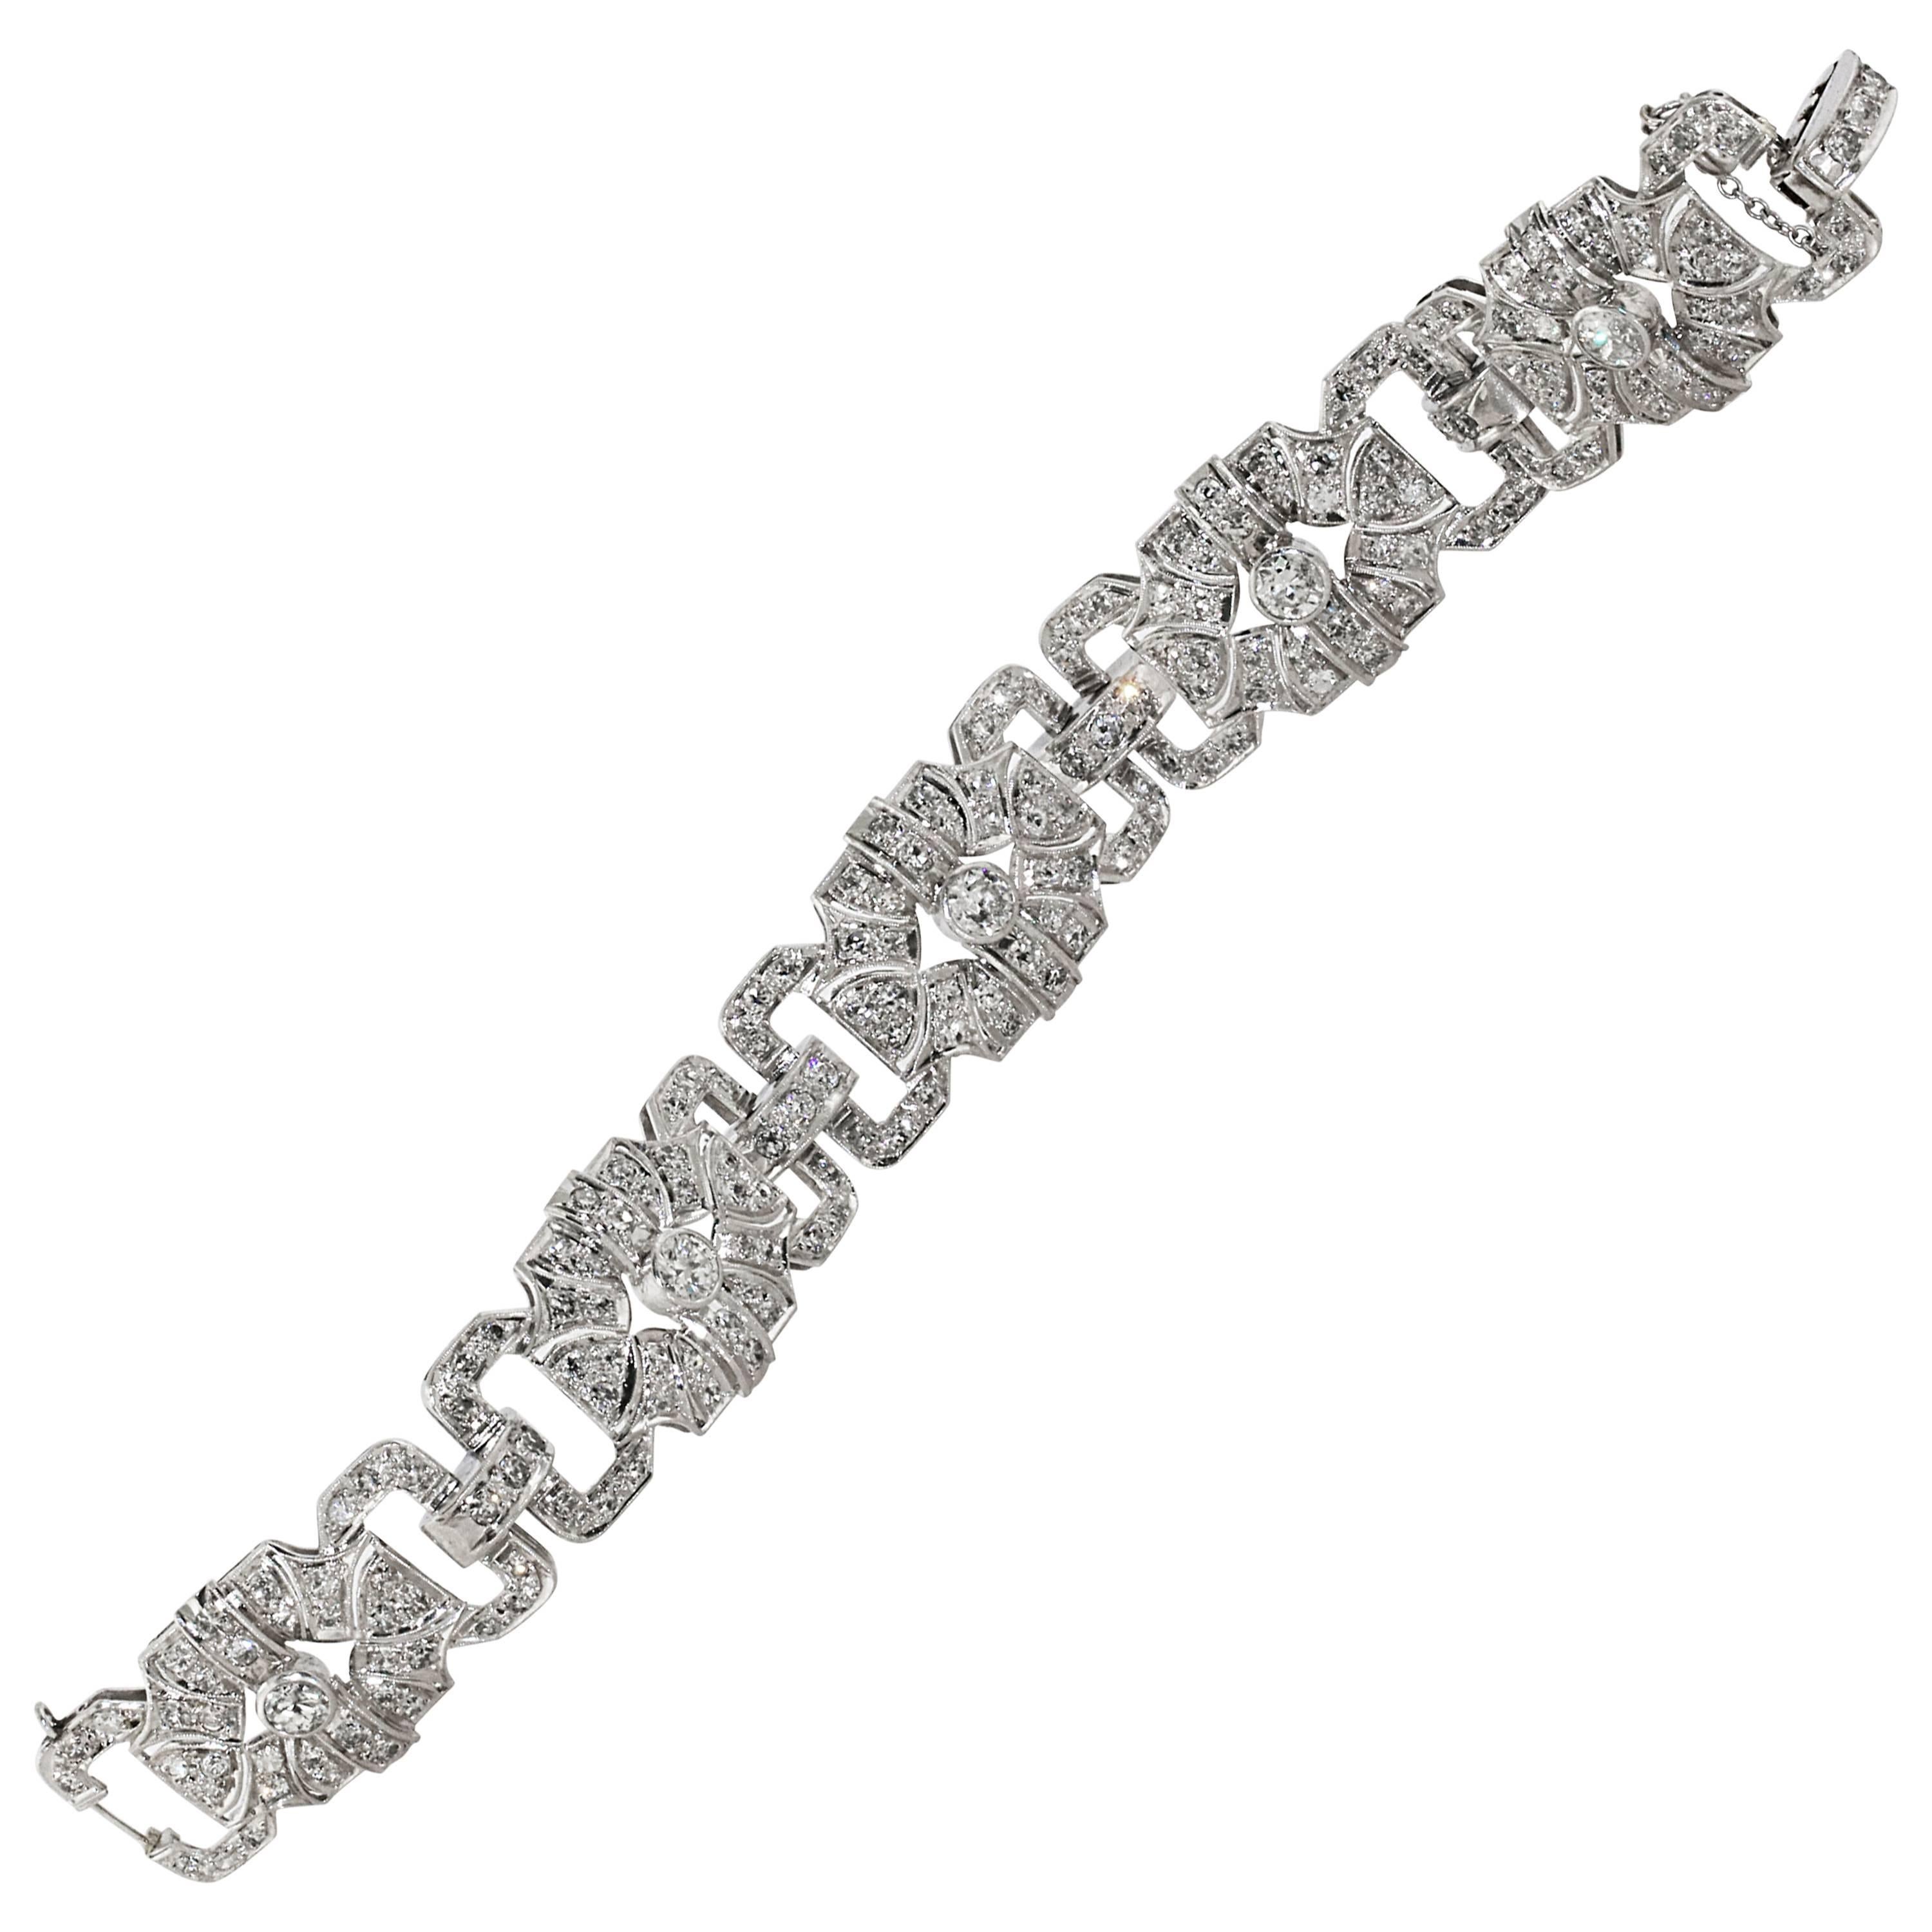 Platinum and Diamond Art Deco Style Bracelet, Approximate 7.50 Carat Diamond